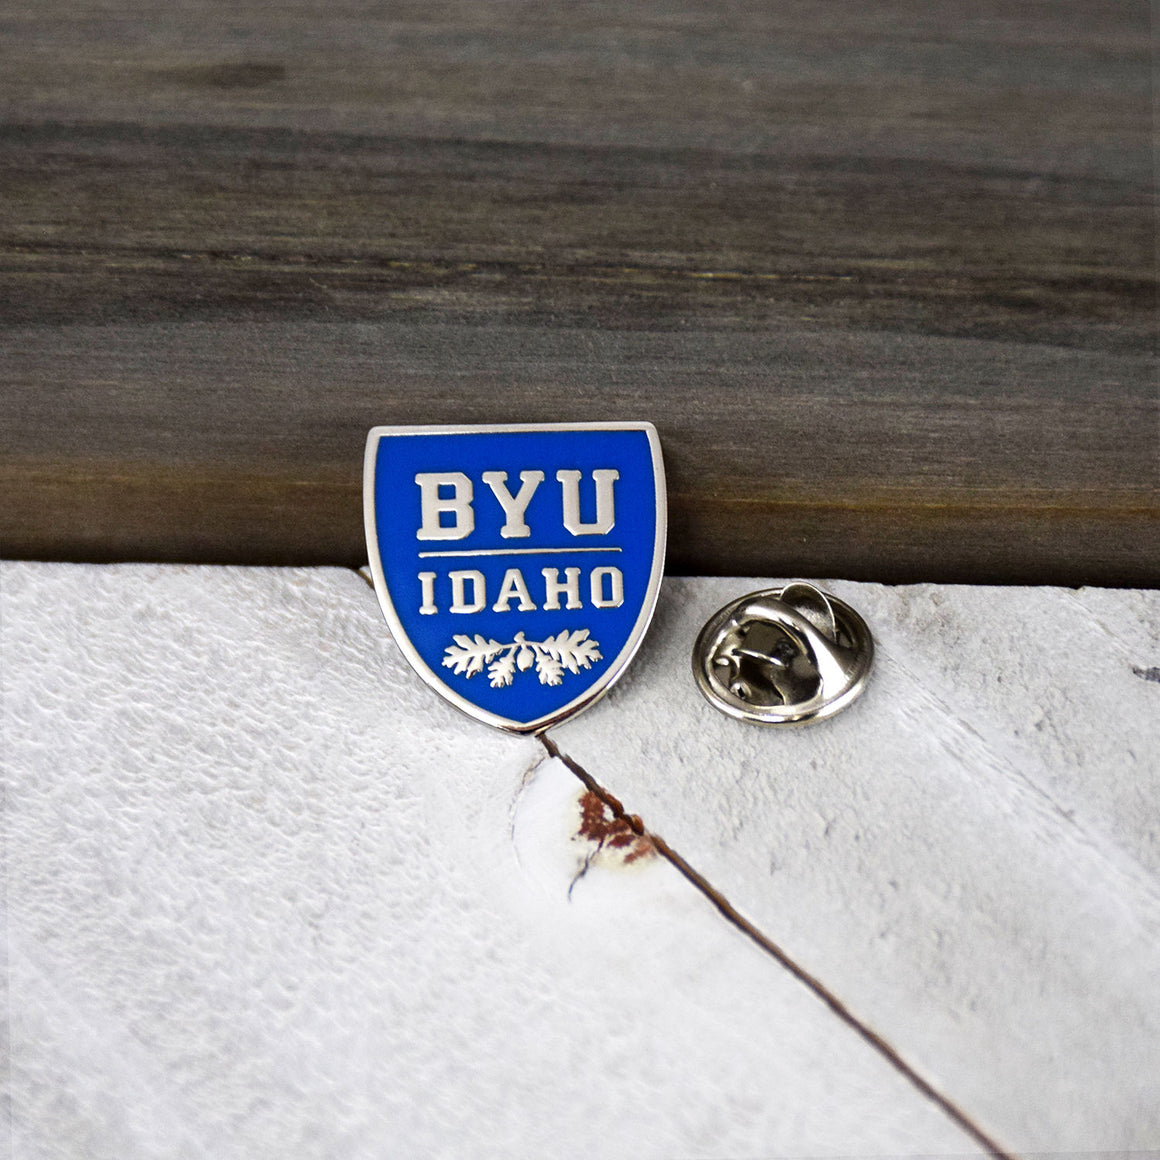 BYU Idaho Pin